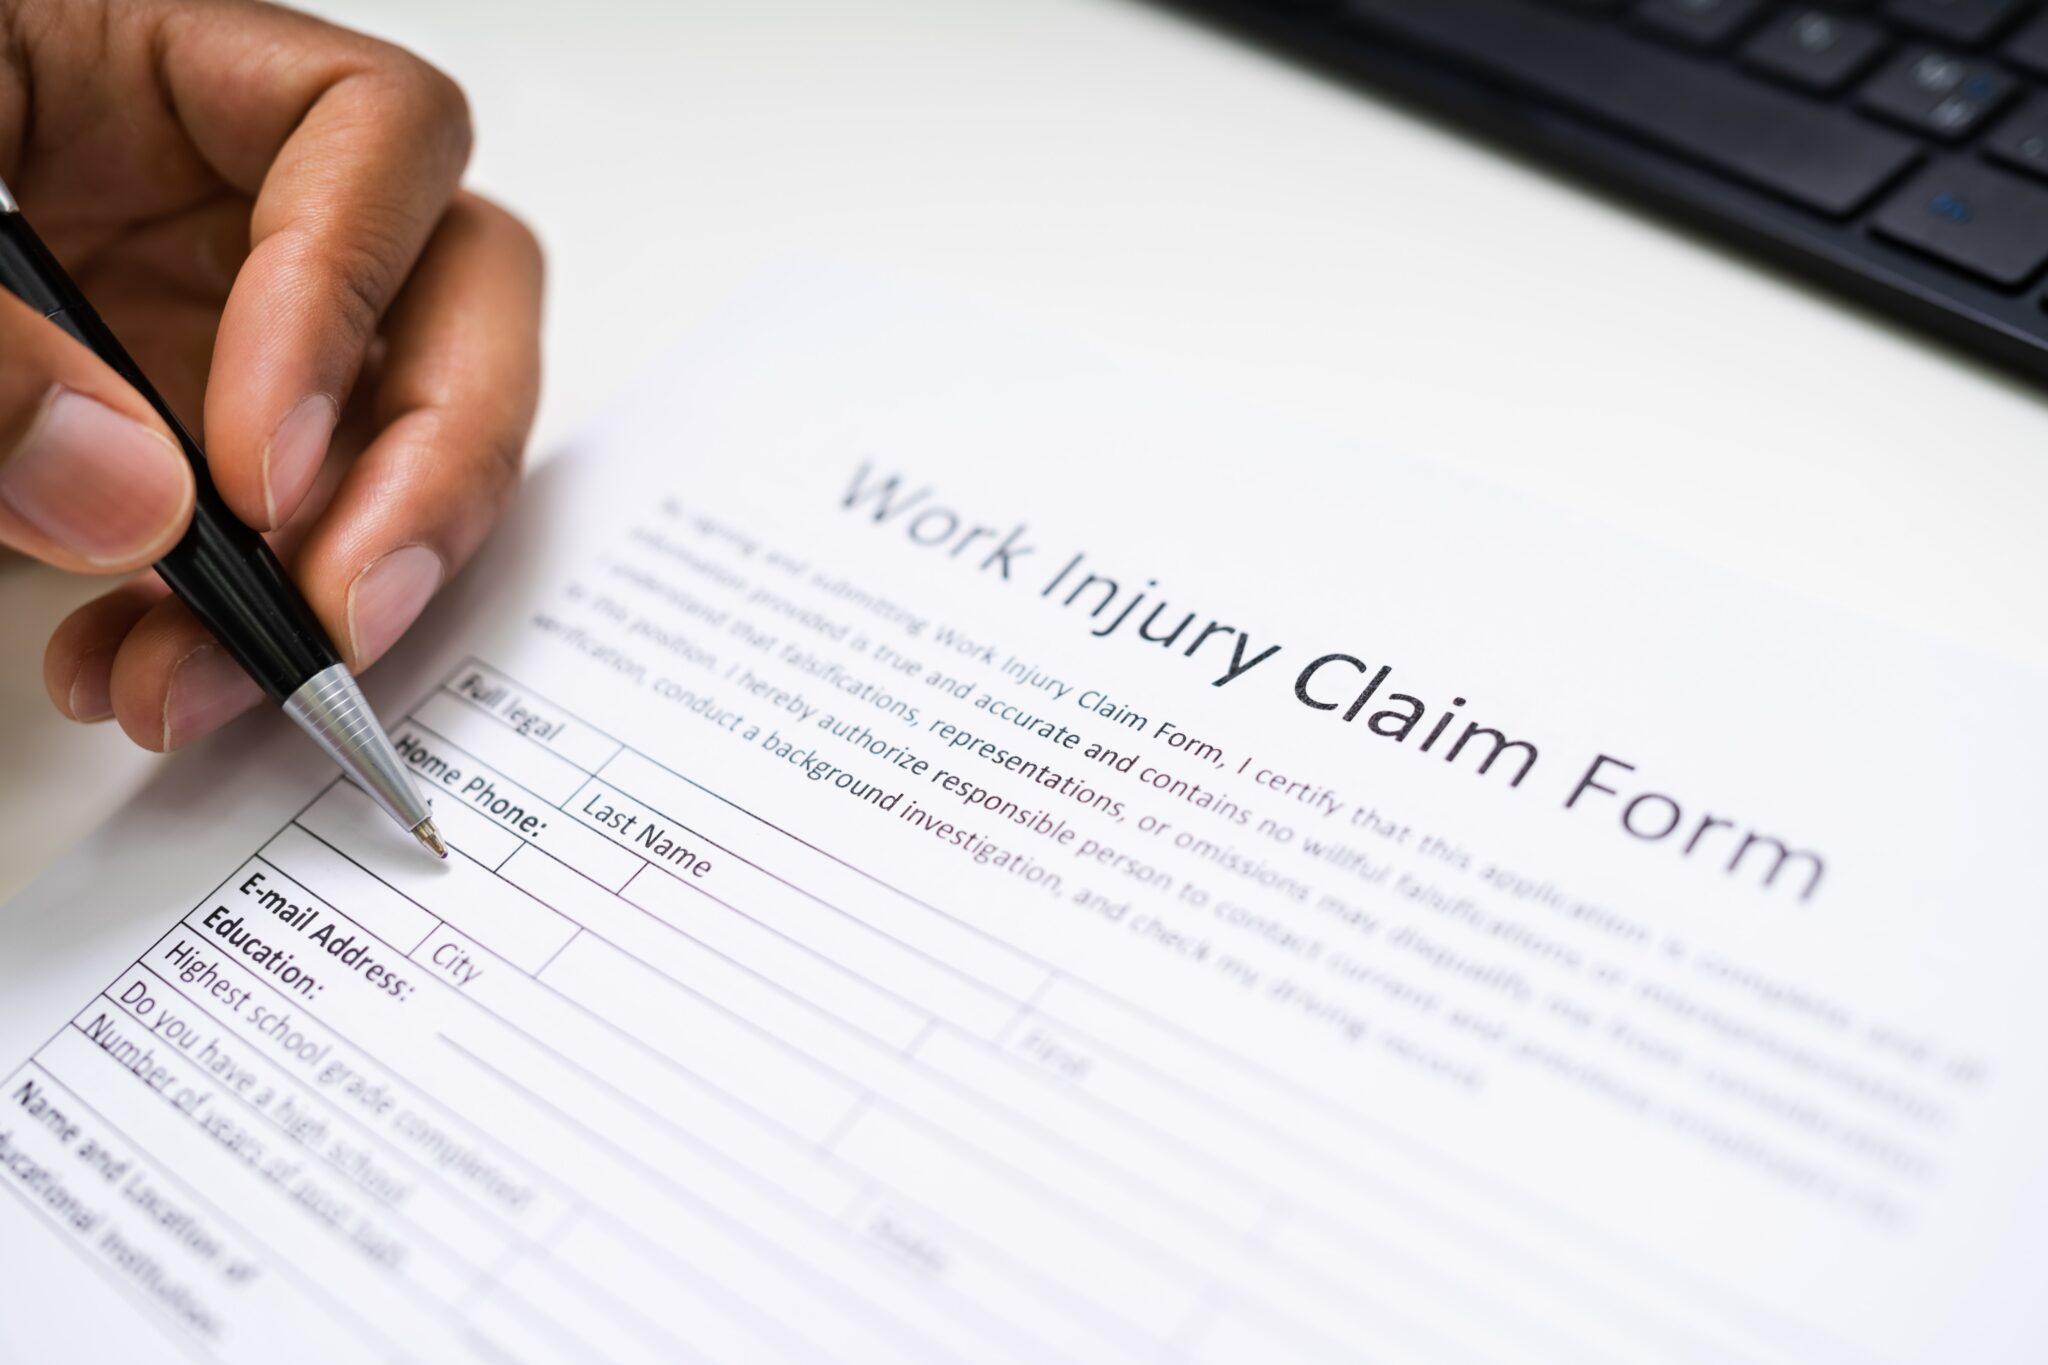 work injury compensation claim form, Maryland, USA